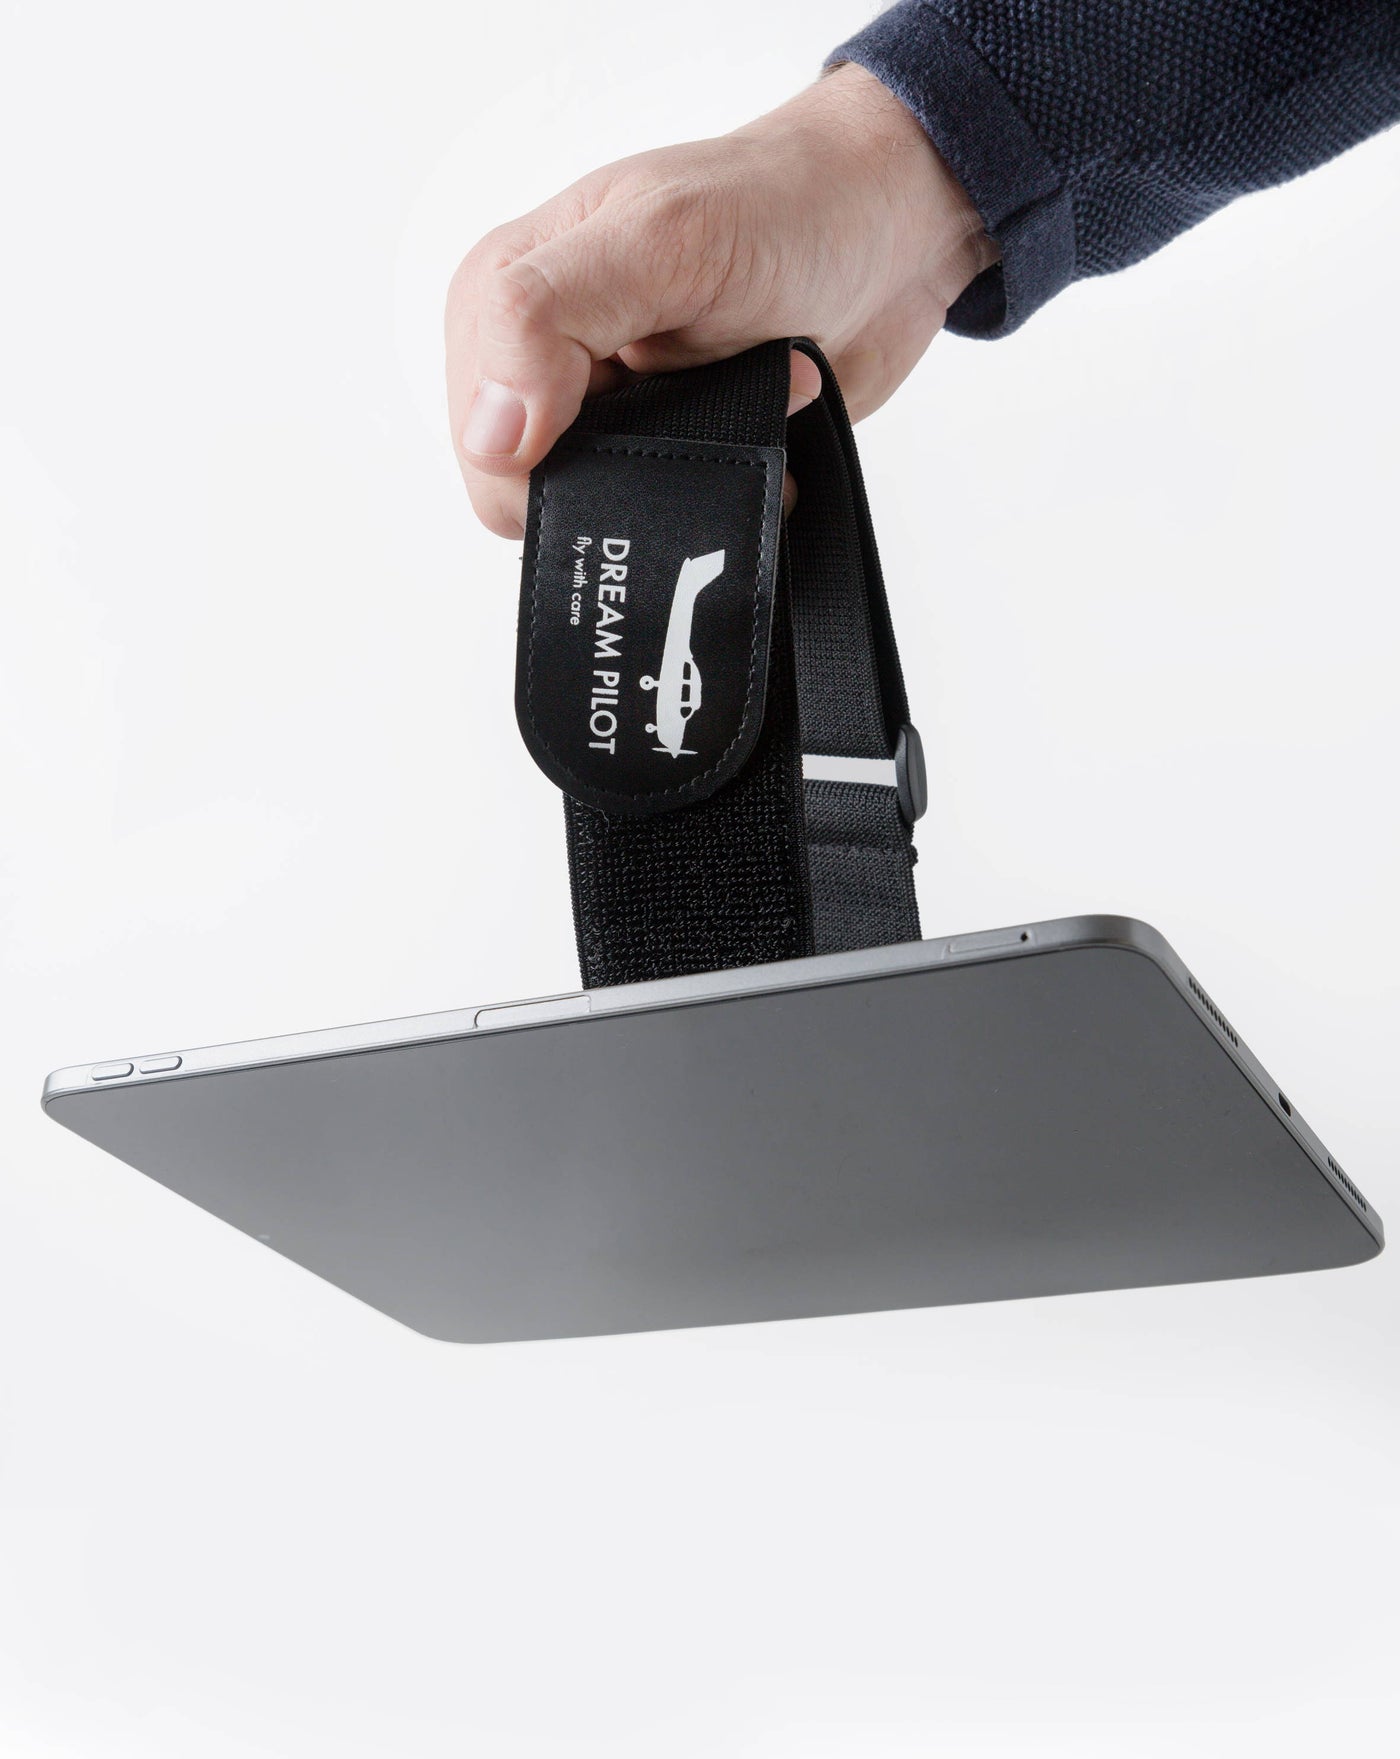 Pilot Kneeboard Universal for iPhone, iPad, Android Smartphone, Tablet –  Pilot kneeboard for iPad, iPhone, Smartphones, Android tablets